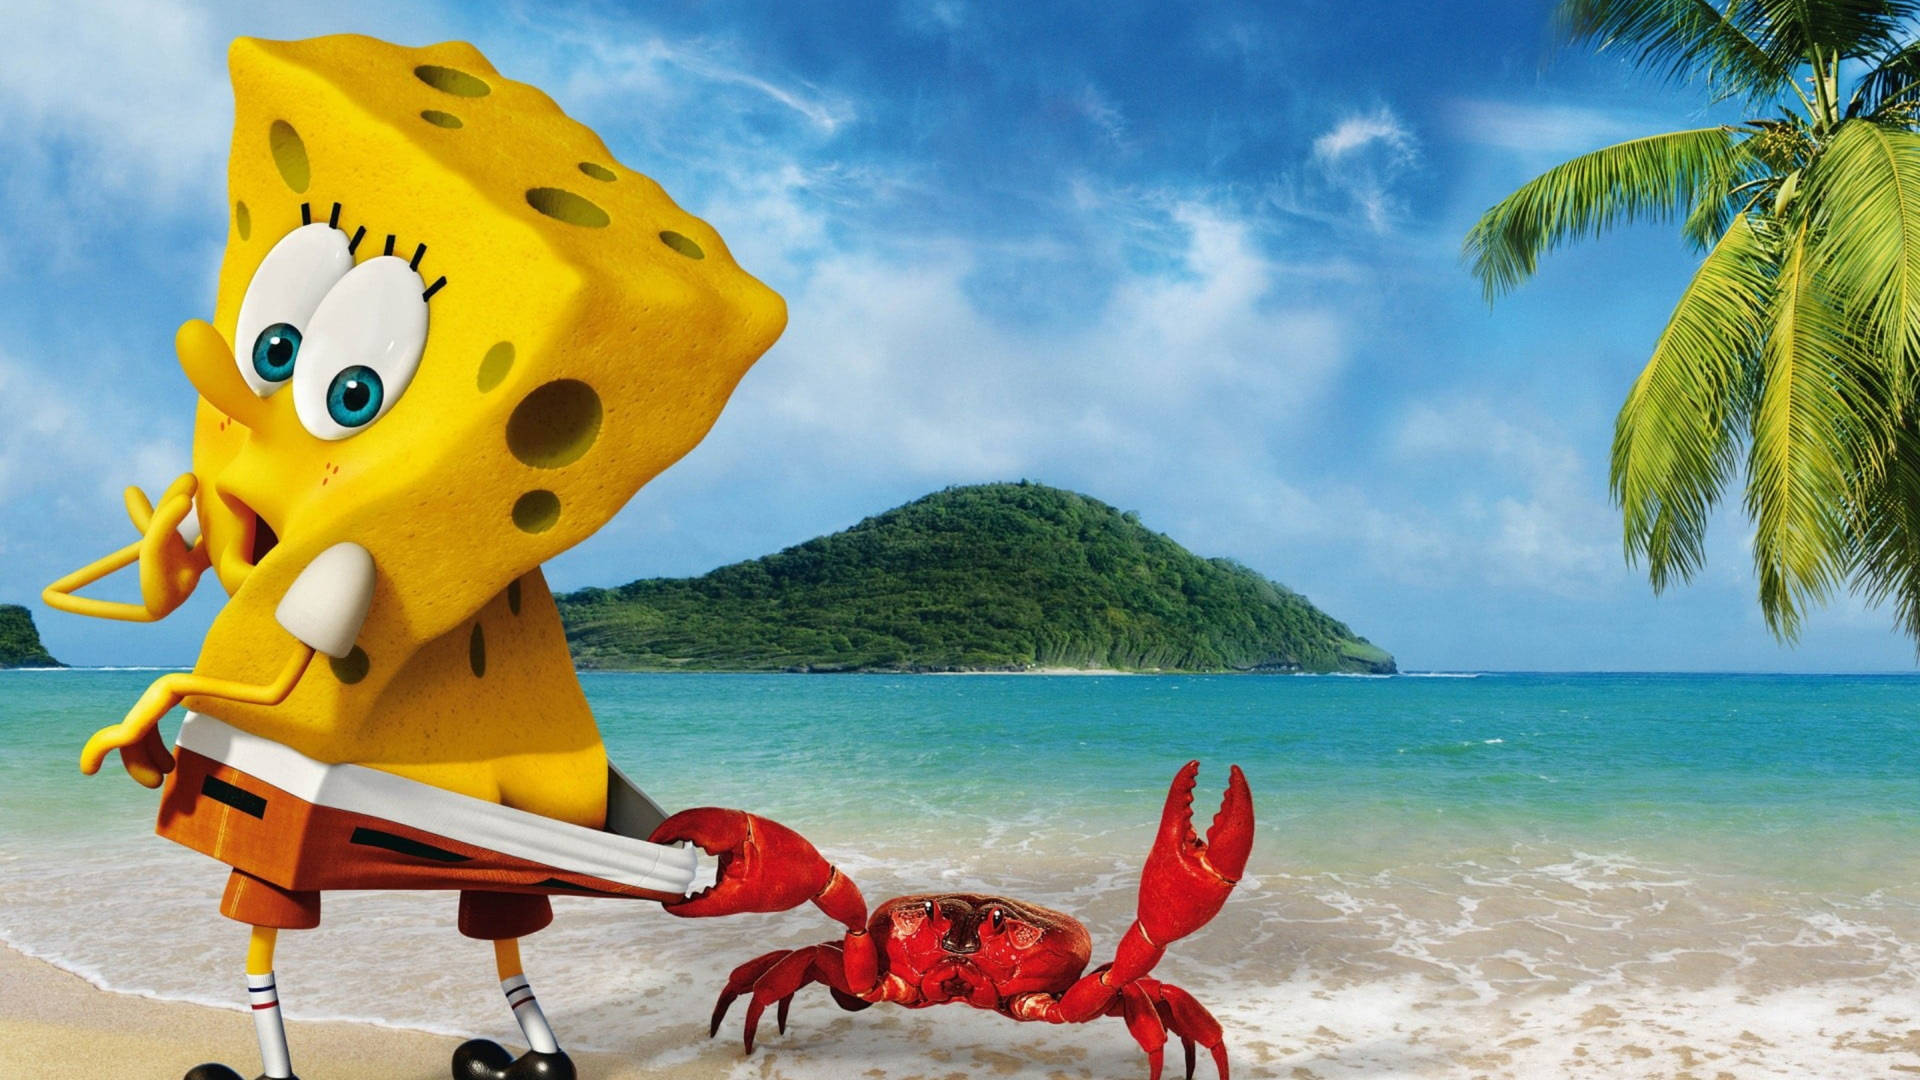 Spongebob And Crab In 3D Wallpaper